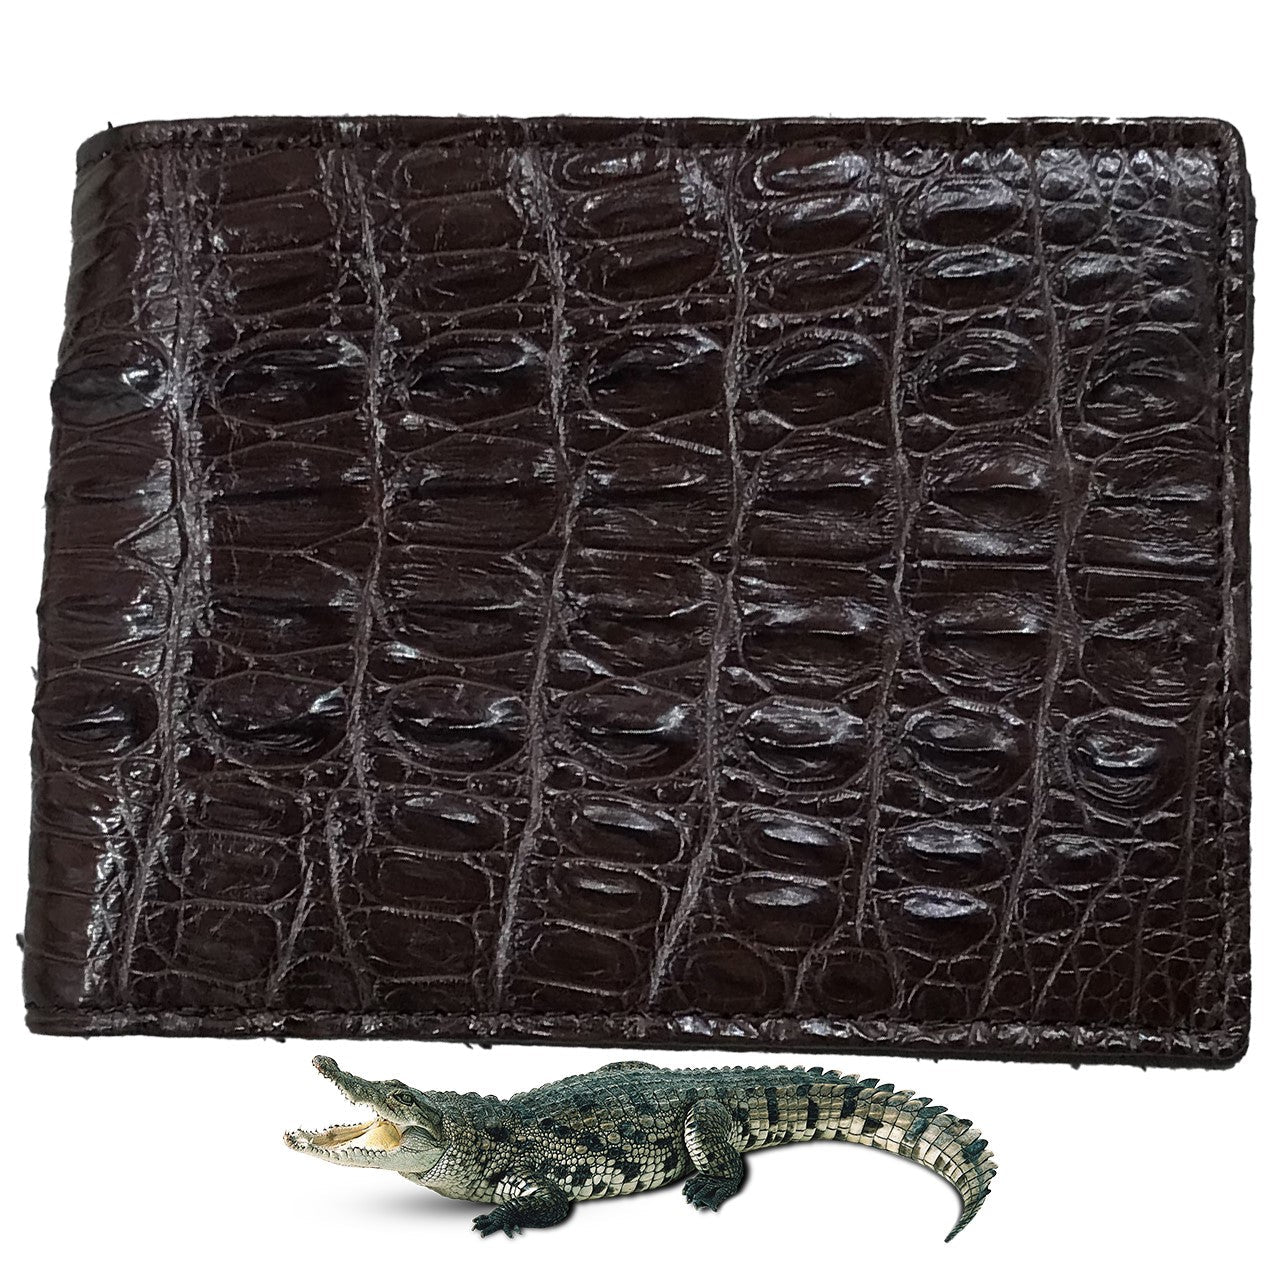 Dark Brown Alligator Skin Bifold Wallet For Men | Handmade Crocodile Leather Wallet RFID Blocking | VL5710 - Vinacreations